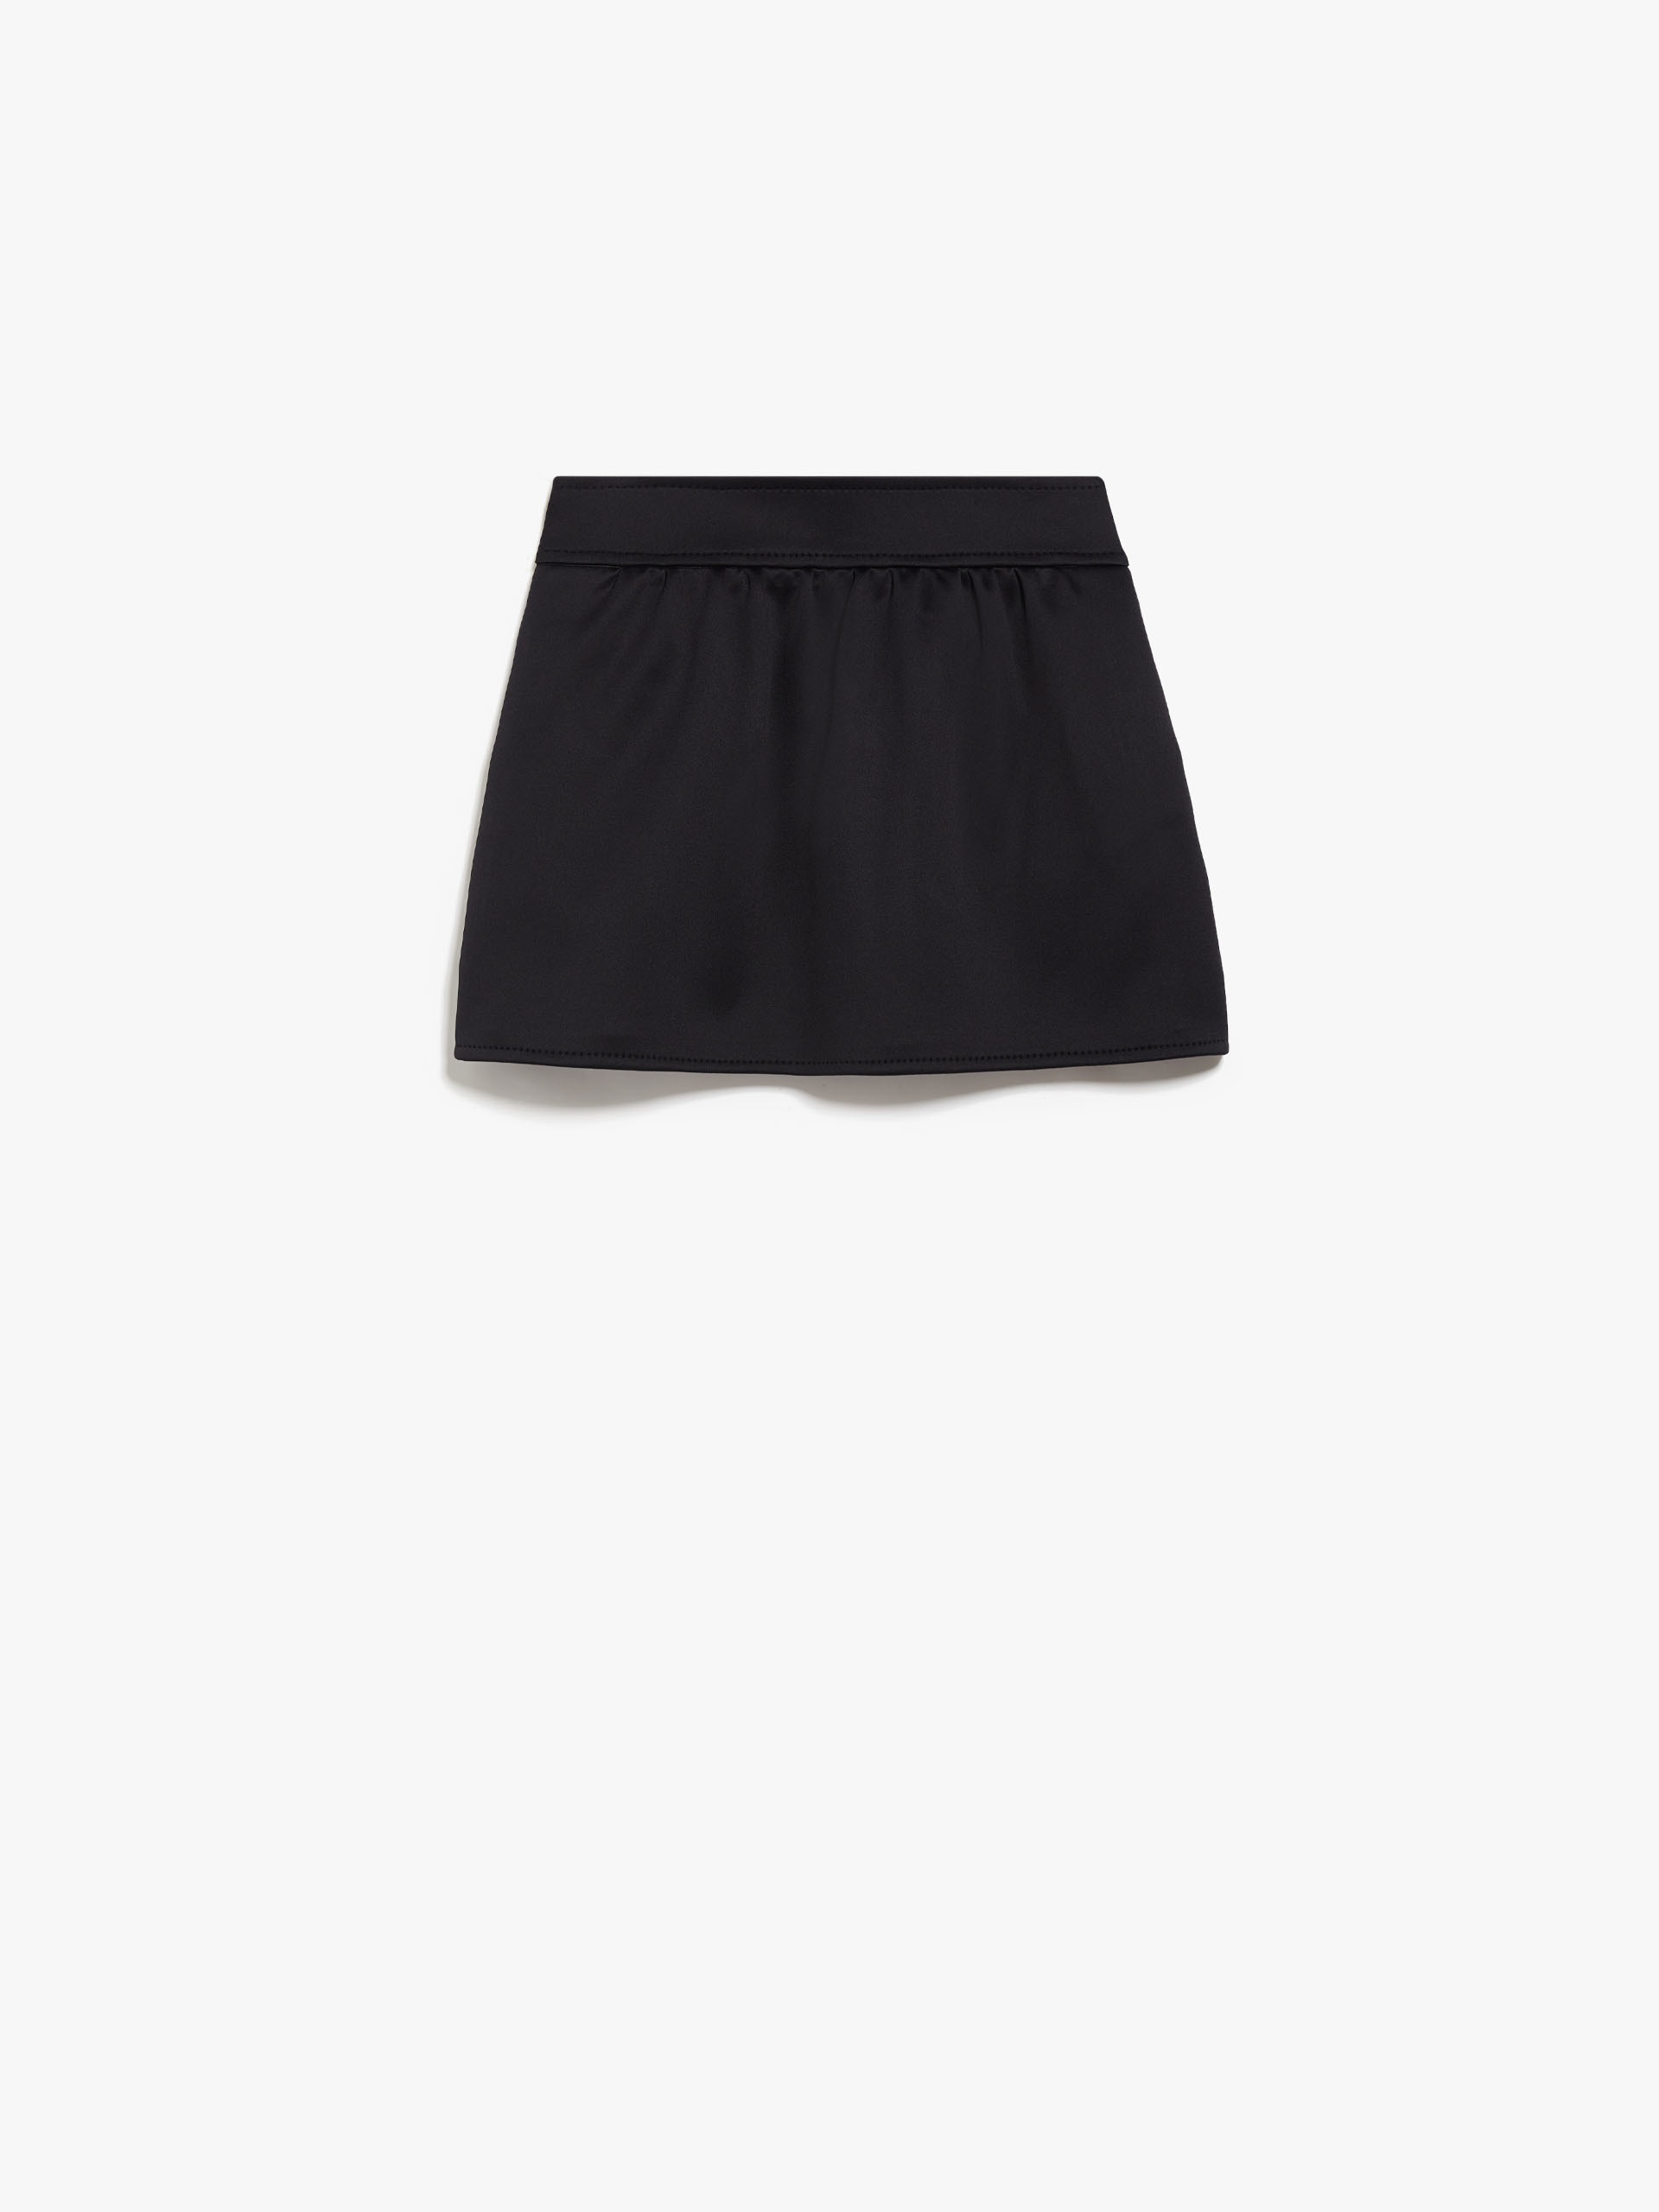 Short skirt in cotton scuba fabric - 1